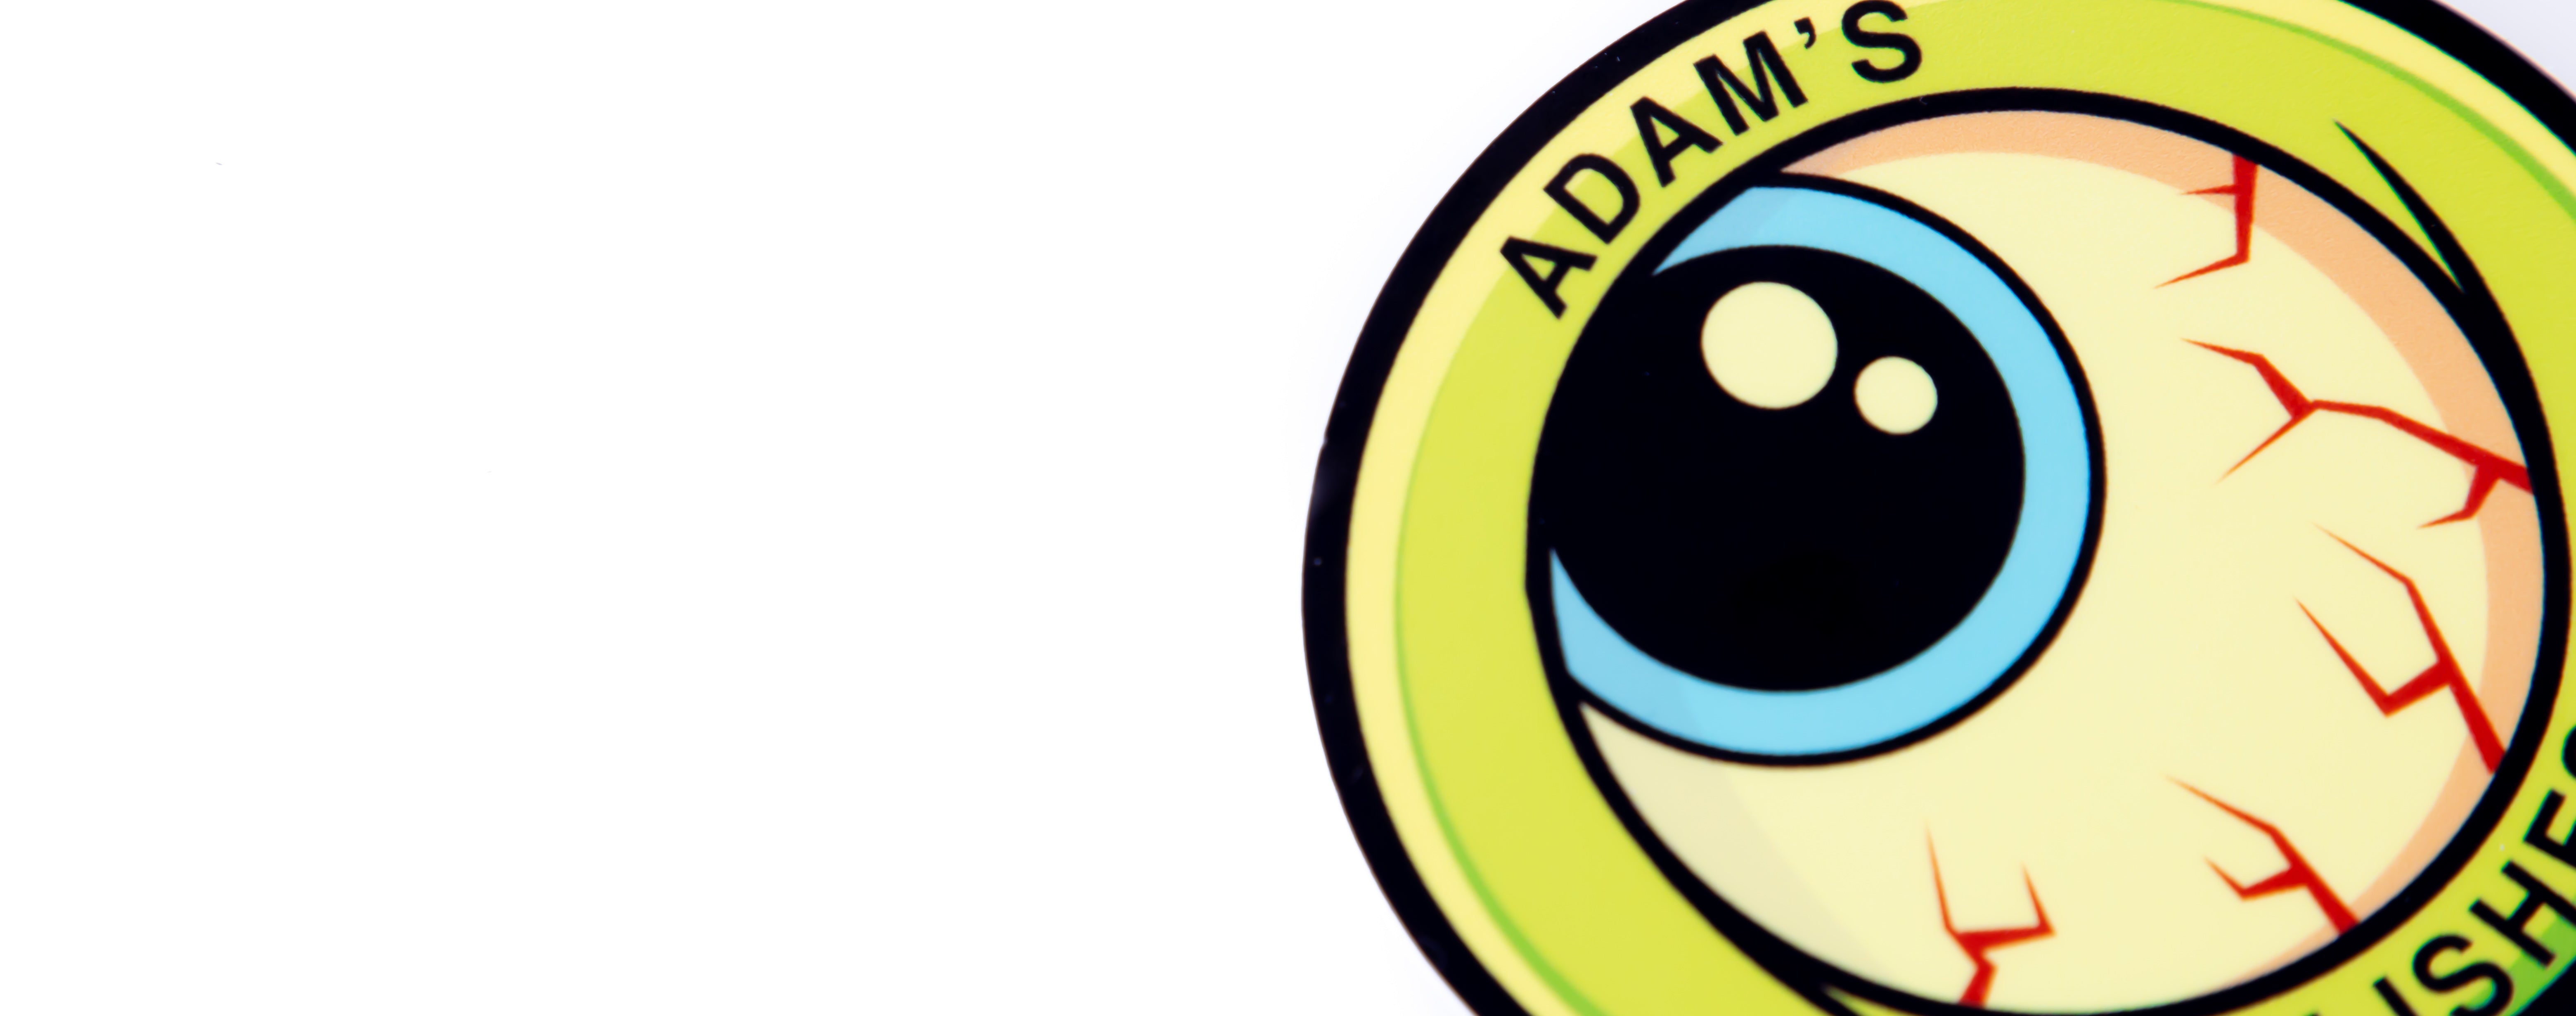 Adam's 3 Eyeball Sticker - Adam's Polishes